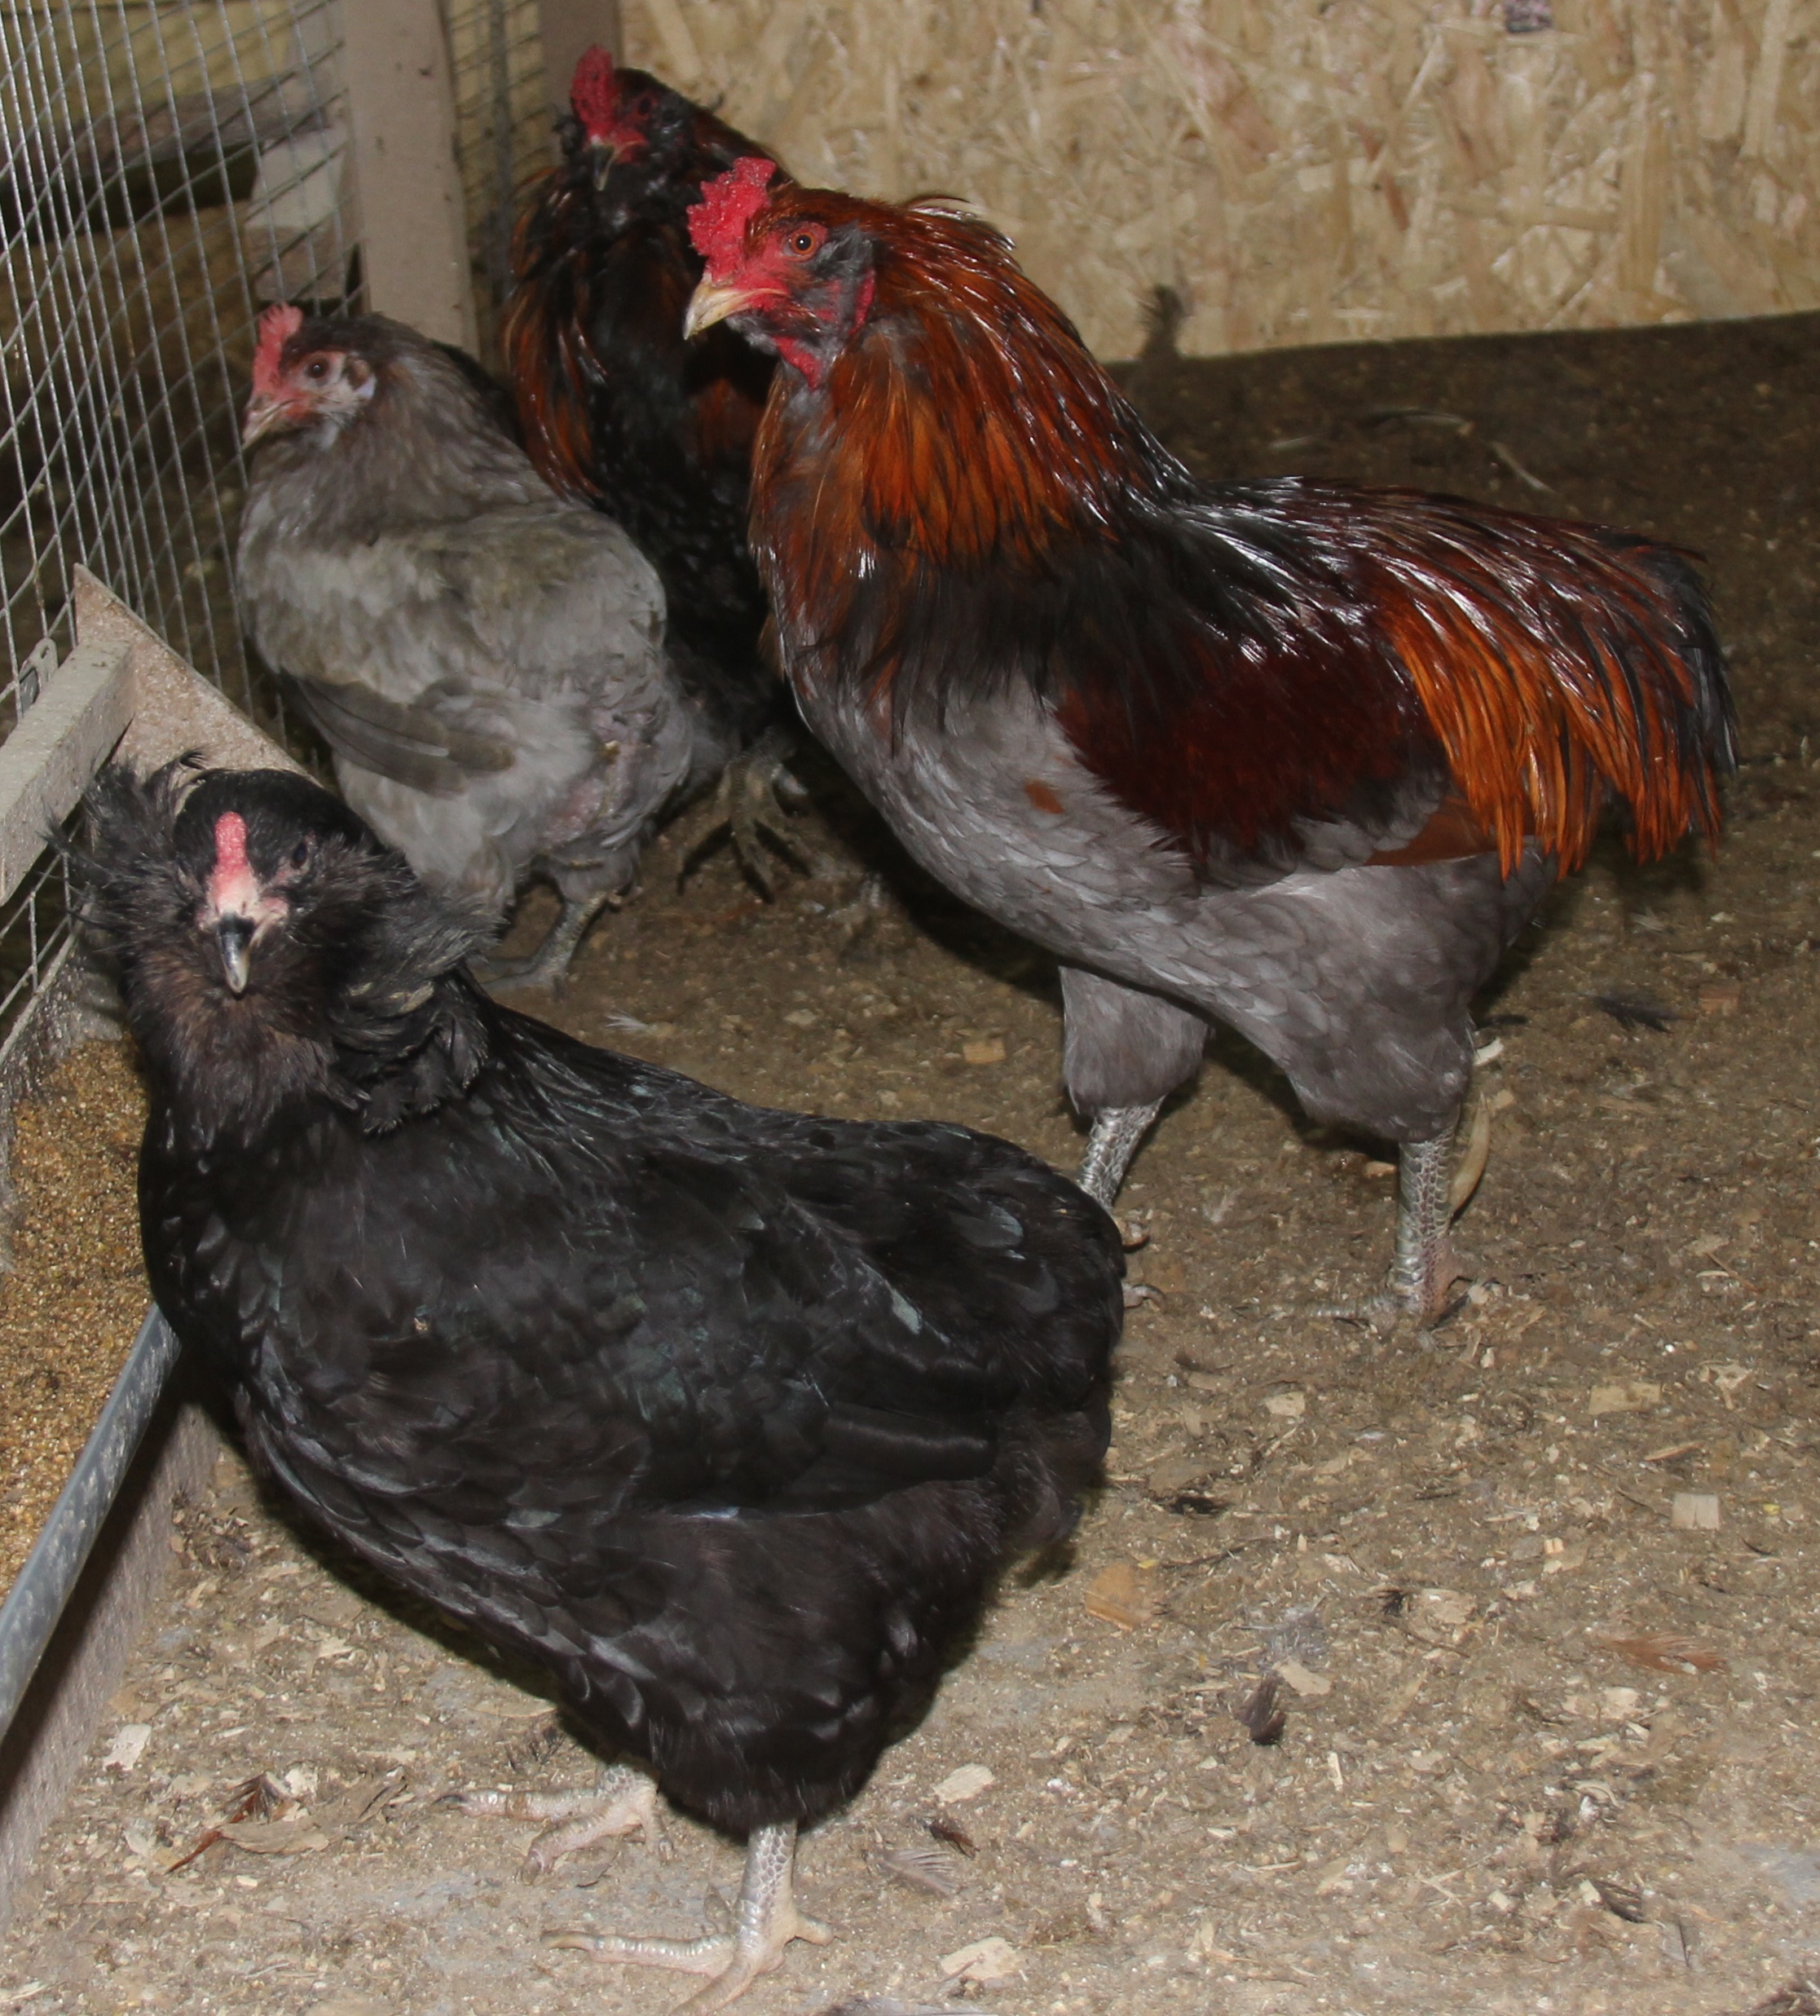 Бандара порода кур – описание с фото и видео